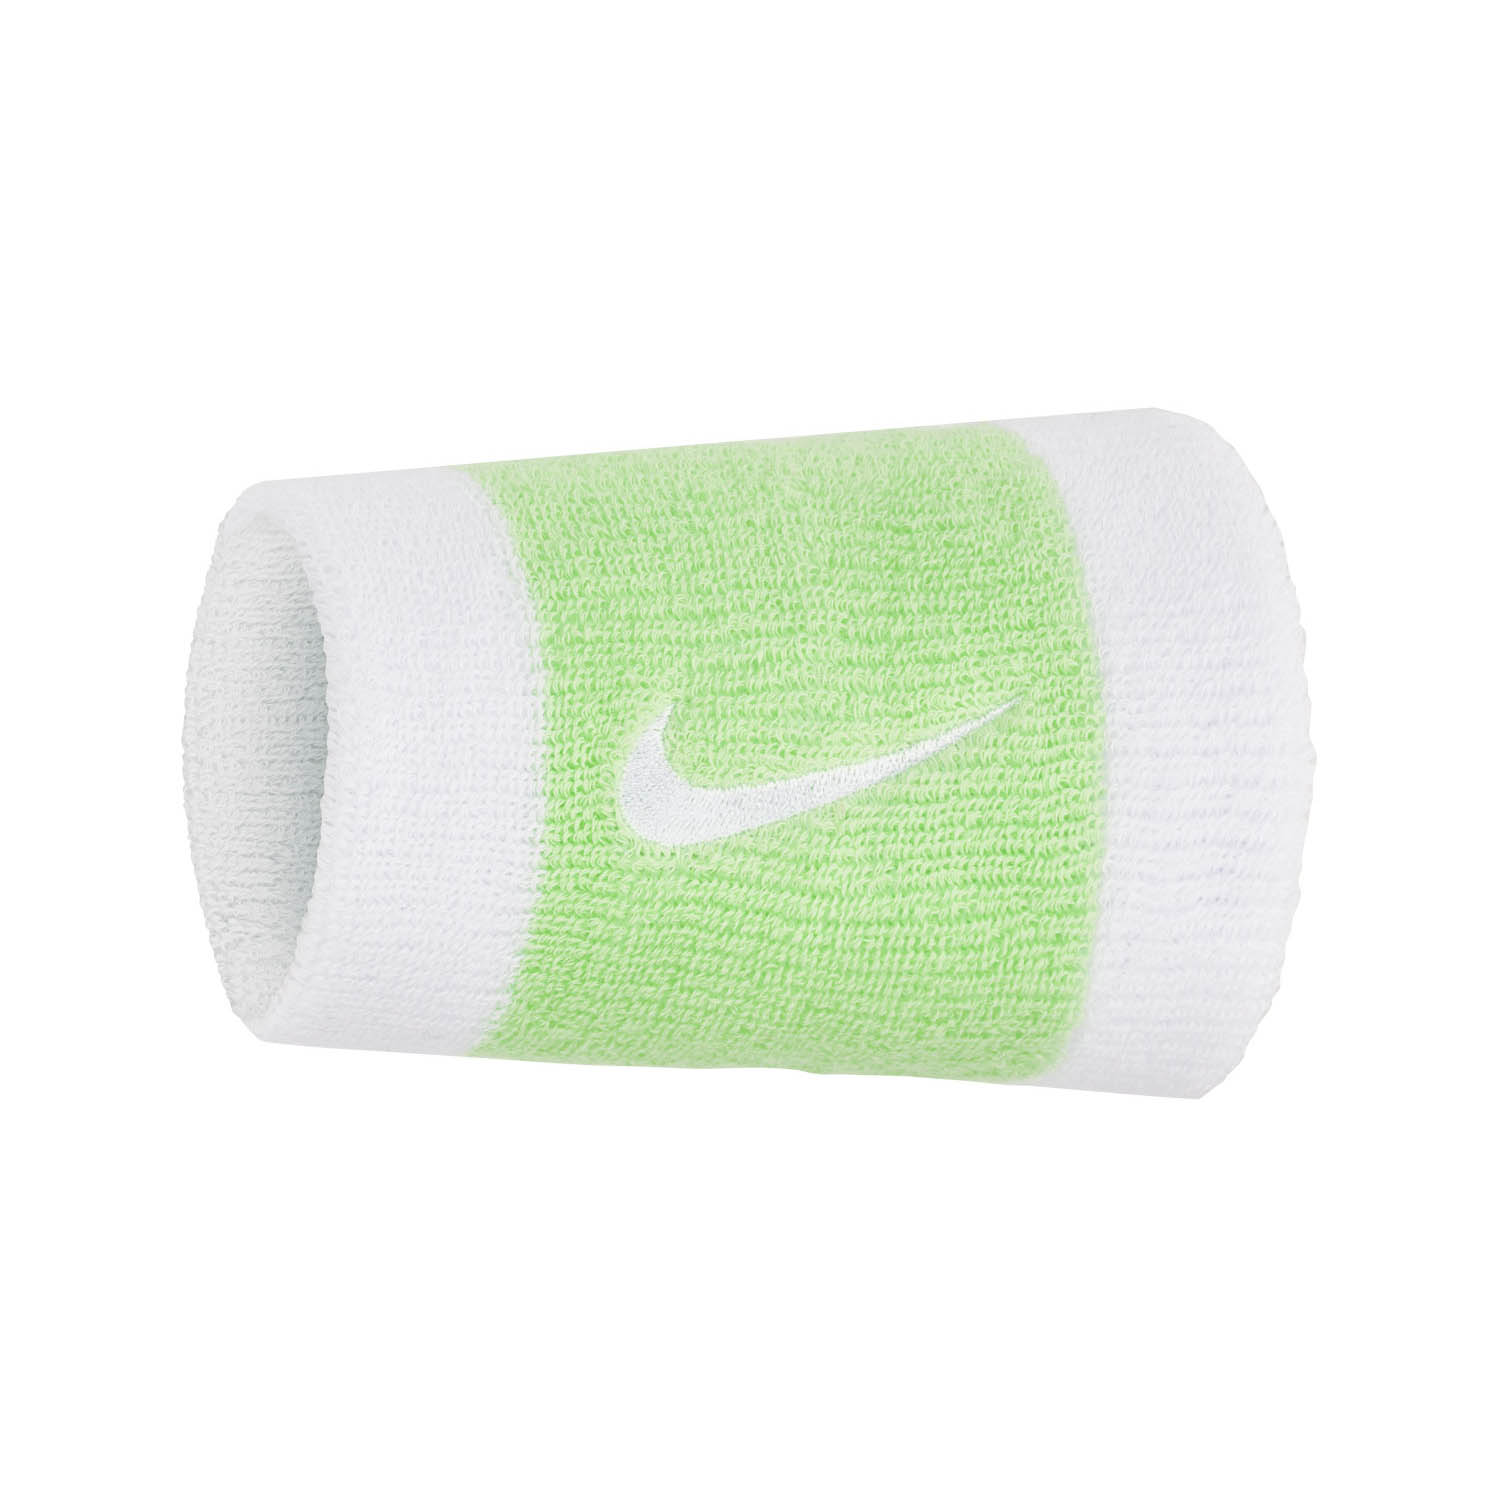 Nike Premier Muñequeras Largas - White/Vapor Green